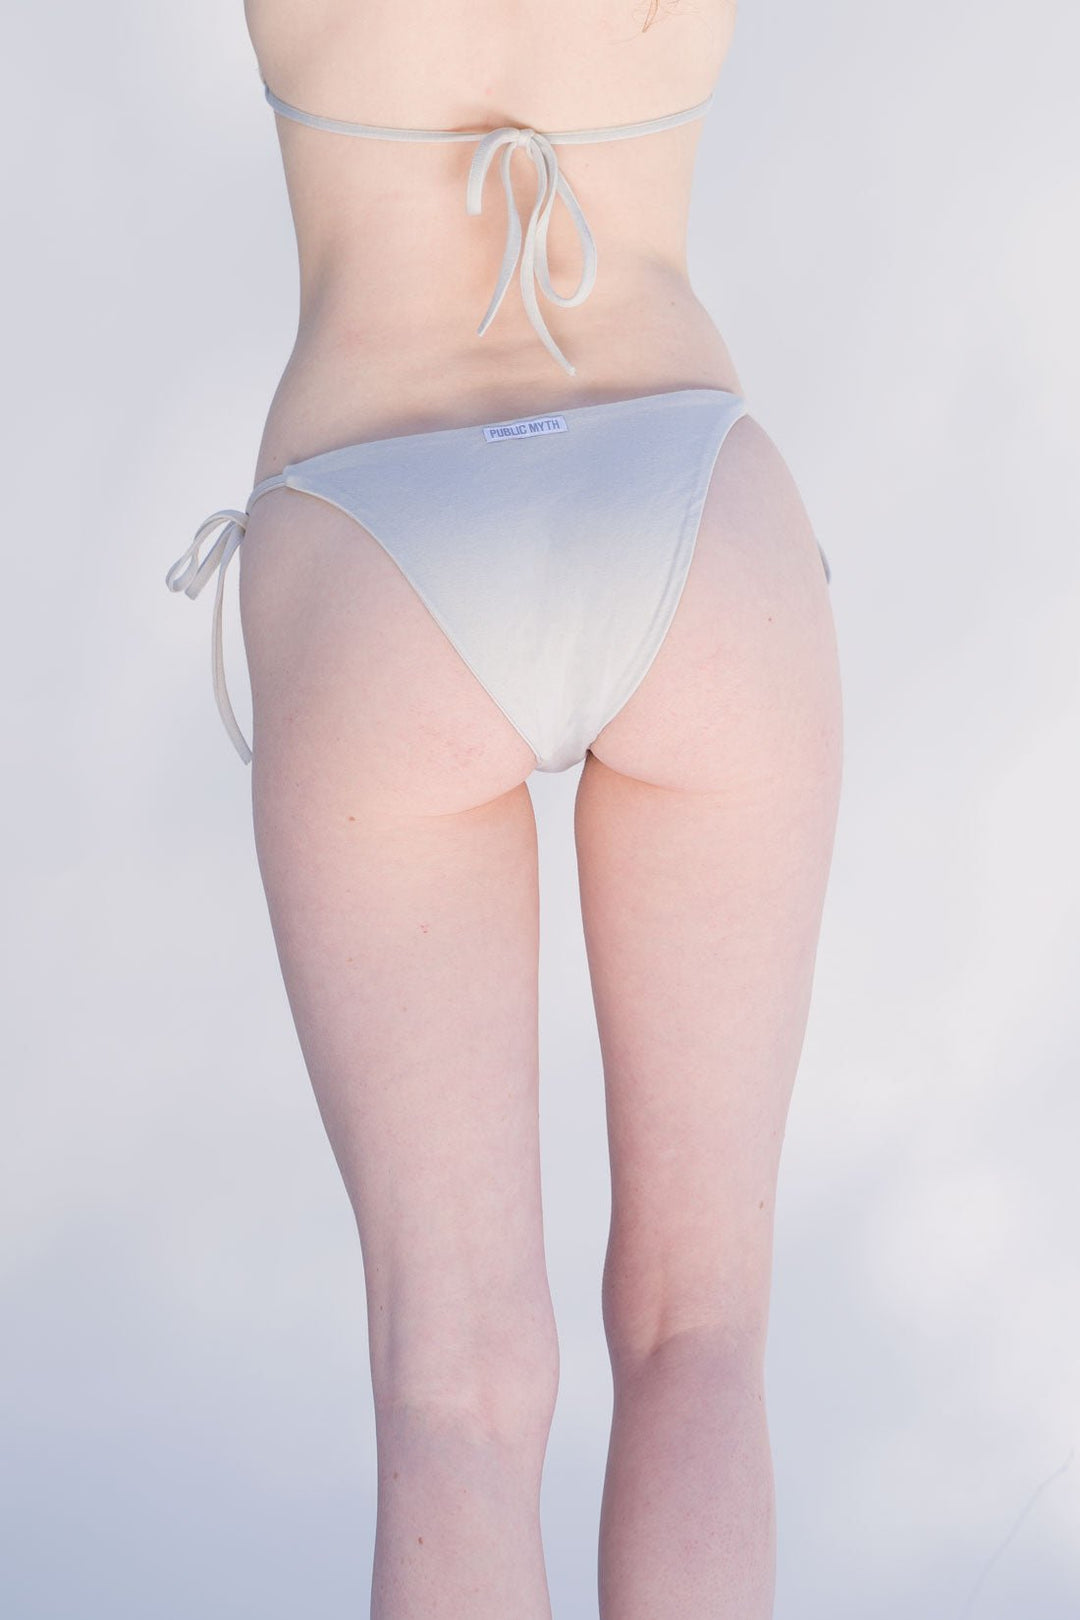 cream bikini bottom